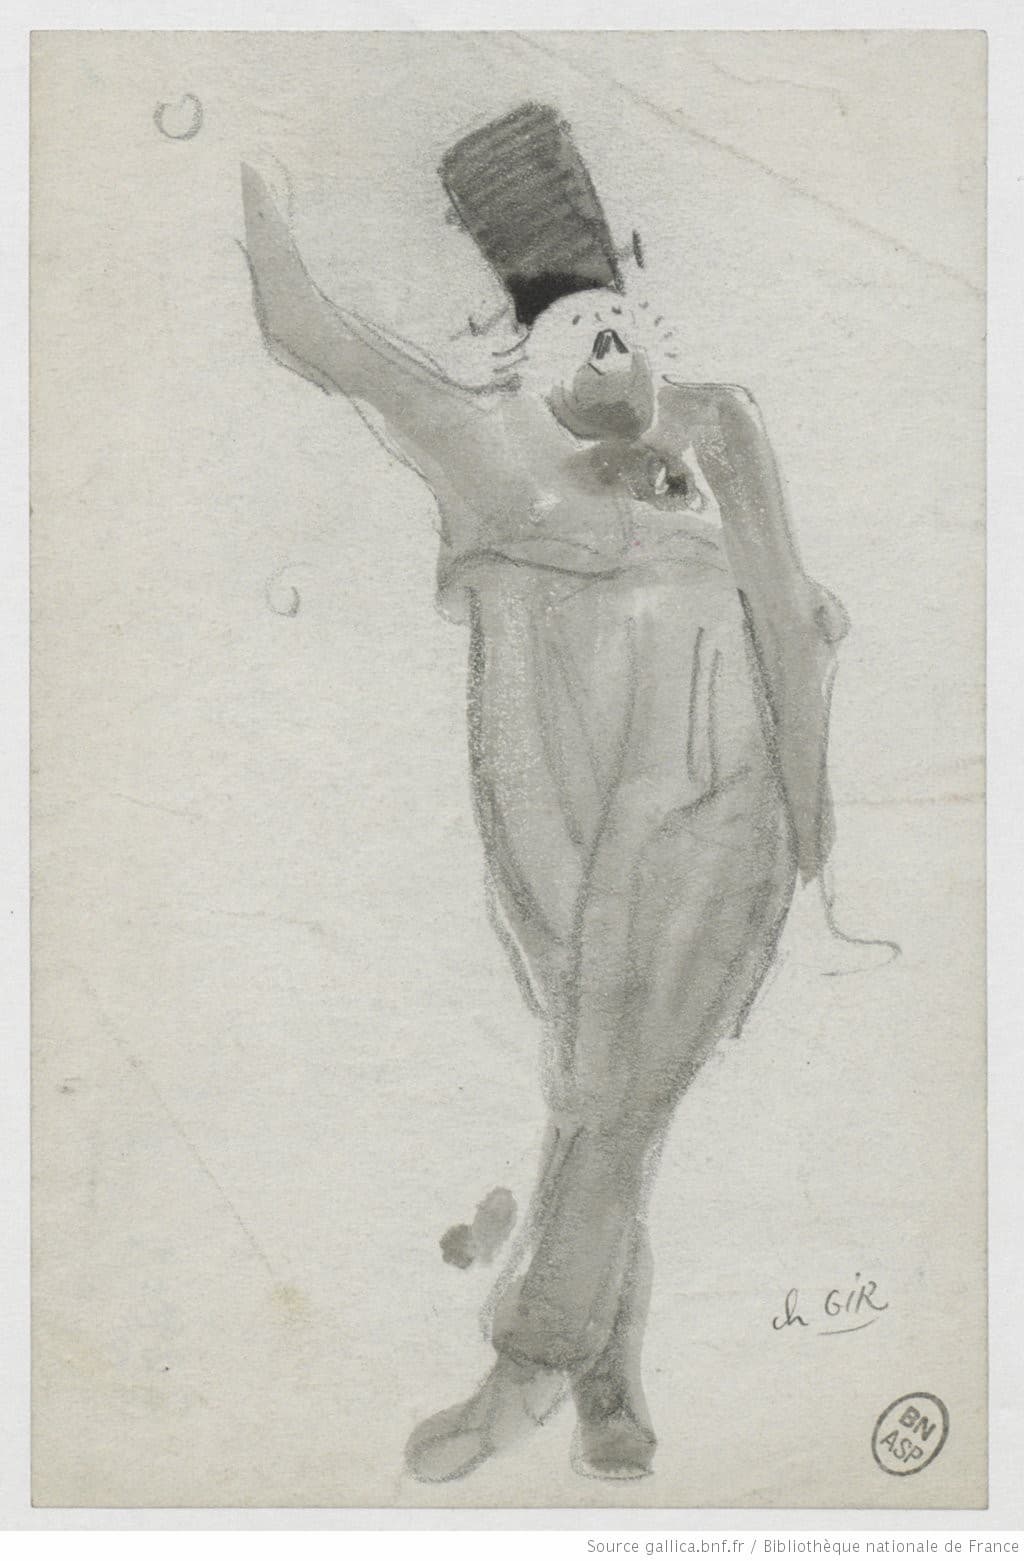 Charles Gir: Clown "Général Lavine", 1910 (Gallica, ark:/12148/btv1b64052019)